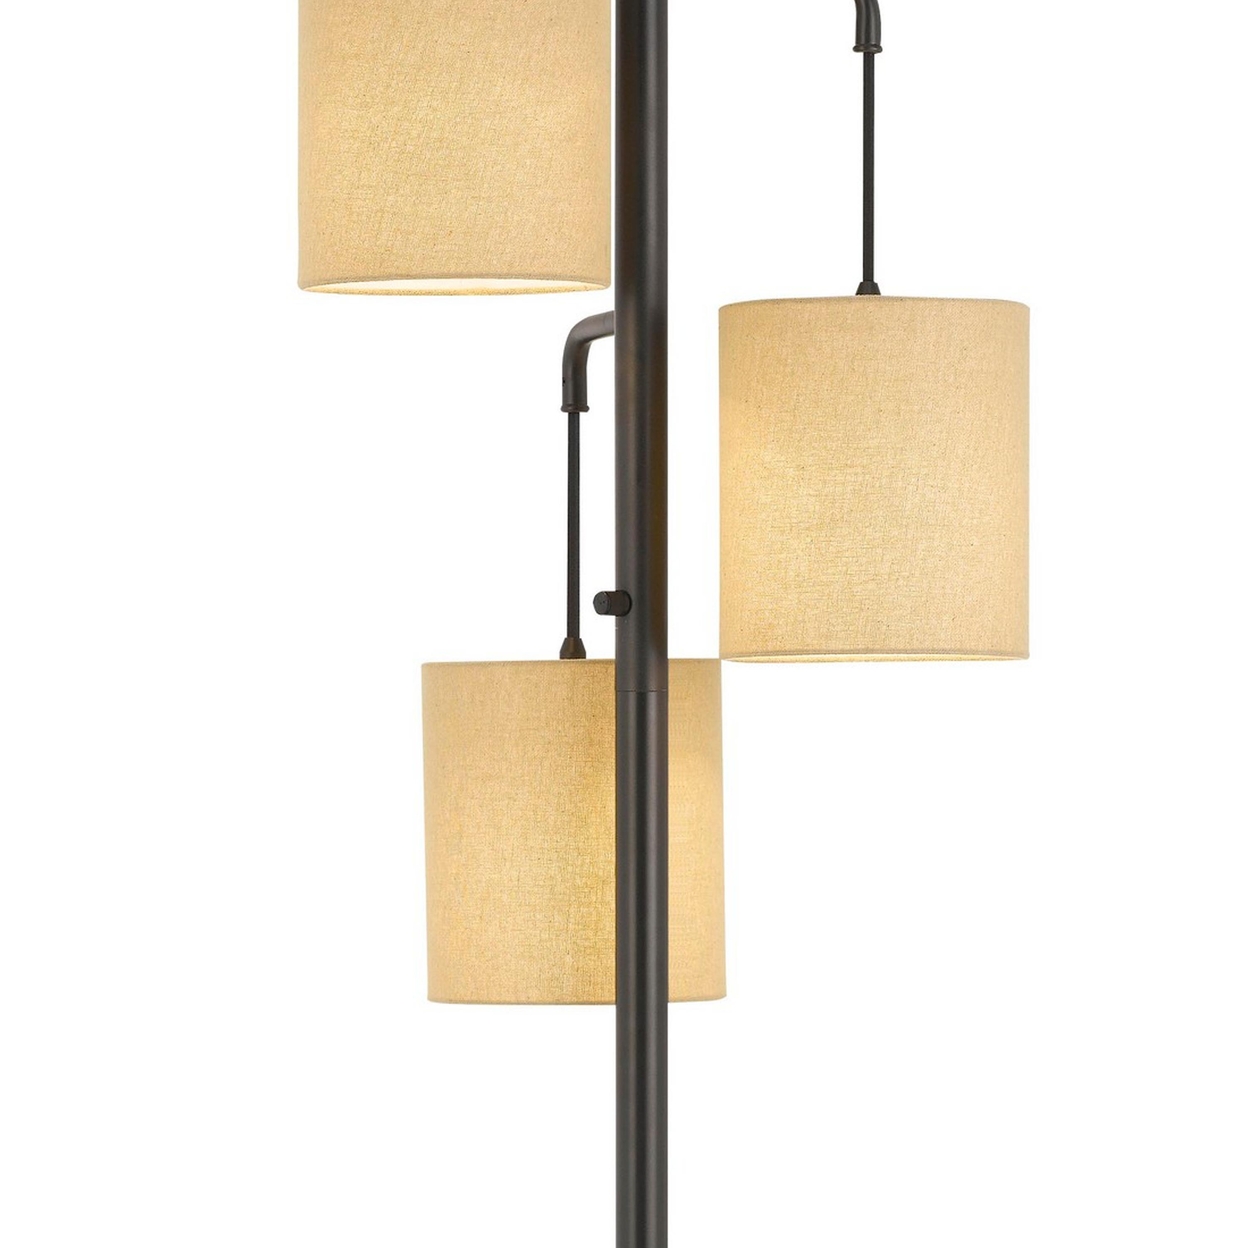 3 Light Lantern Design Metal Floor Lamp With Fabric Shades, Black And Beige- Saltoro Sherpi